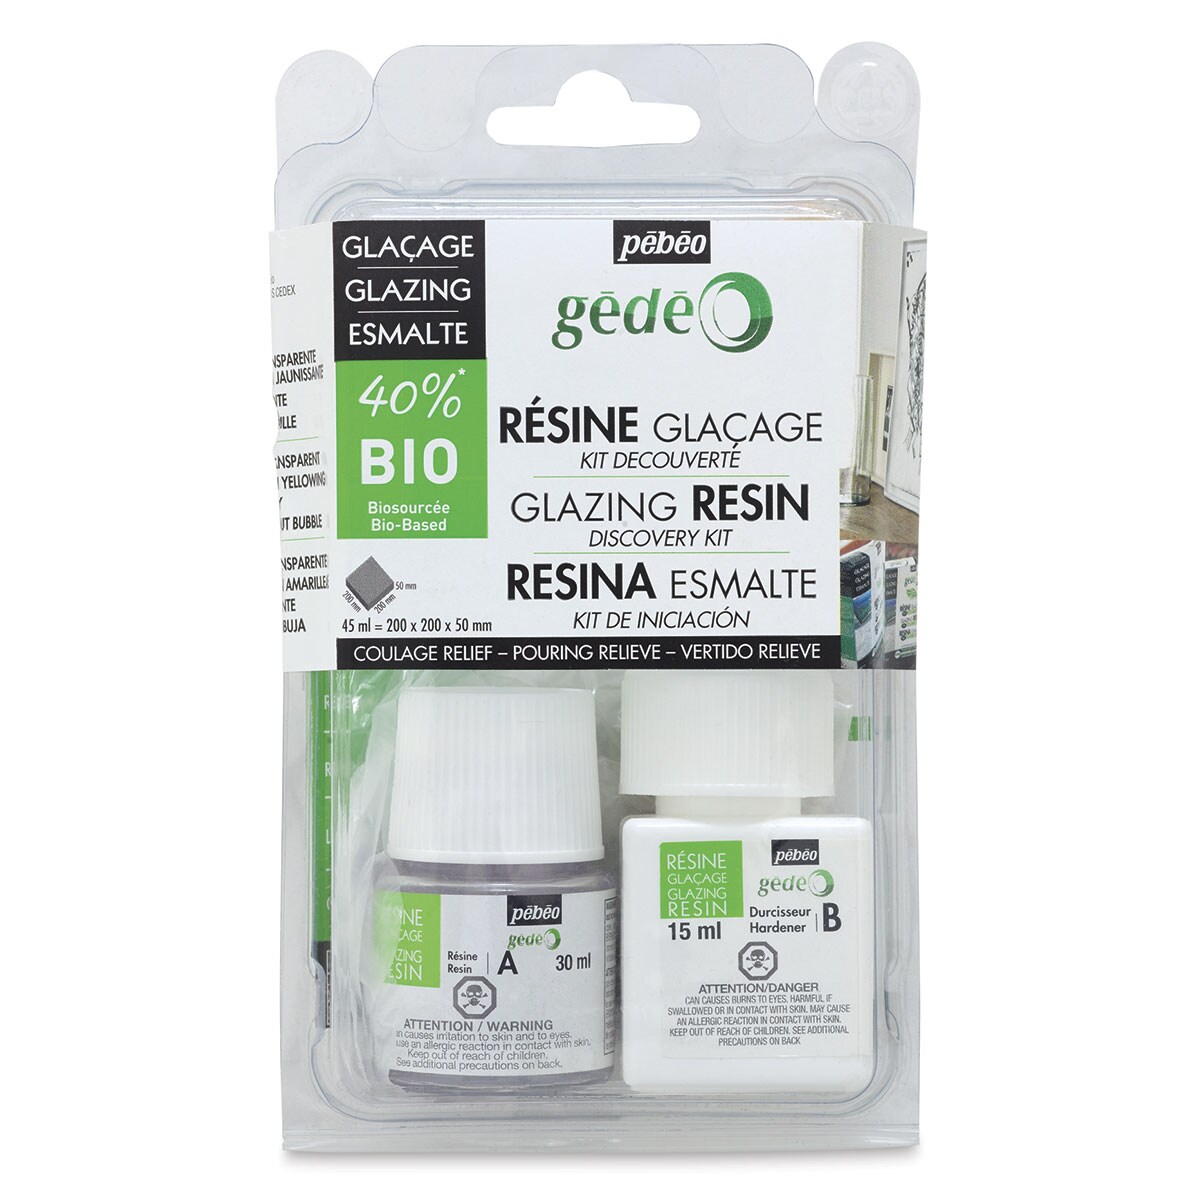 Pebeo Gedeo Bio-Based Resin - Glazing Resin Discovery Kit